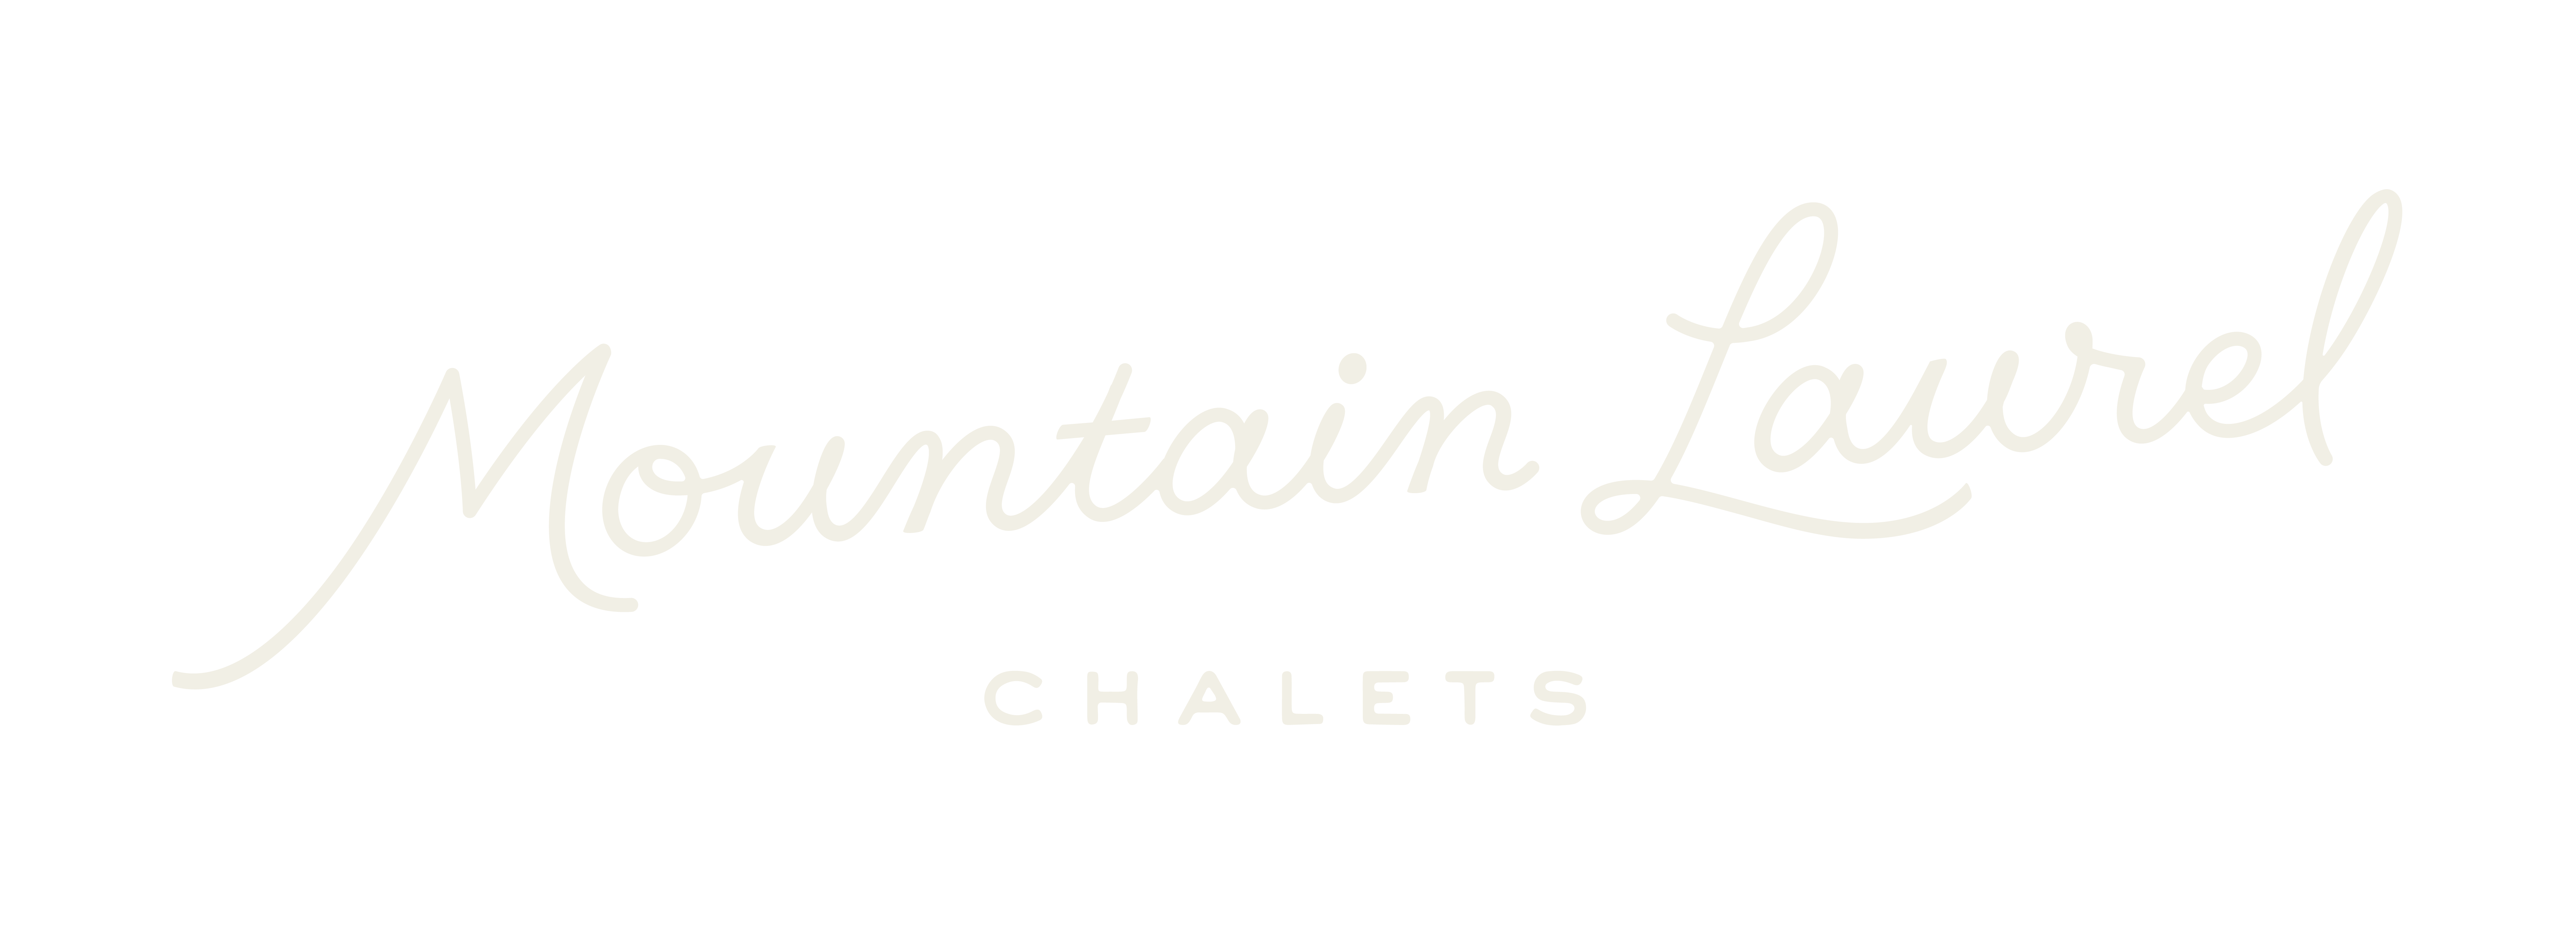 Mountain Laurel Chalets brand logo